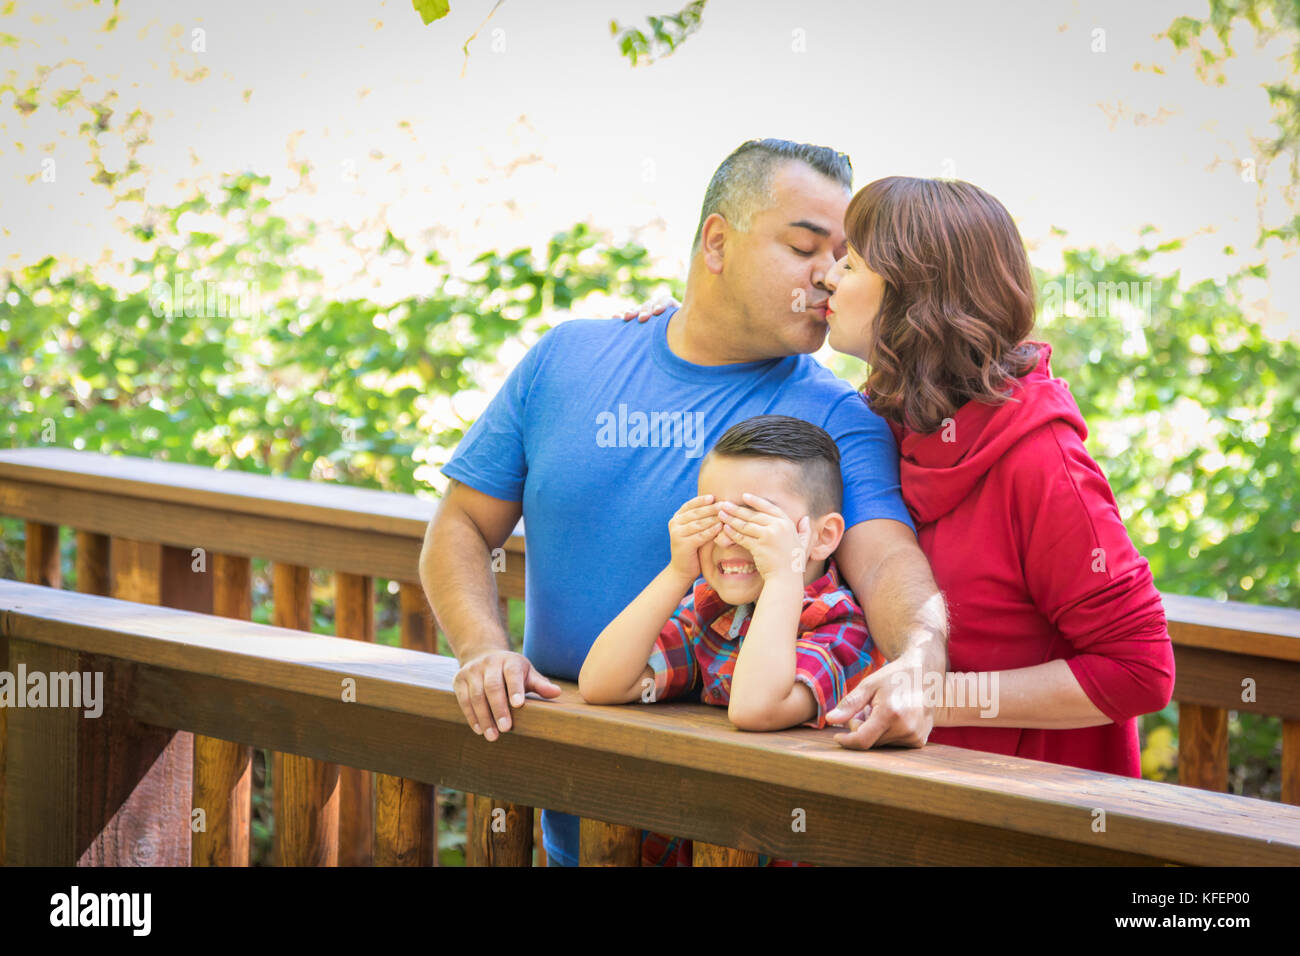 Mixed Race Caucasian and Hispanic Family At The Park. Stock Photo